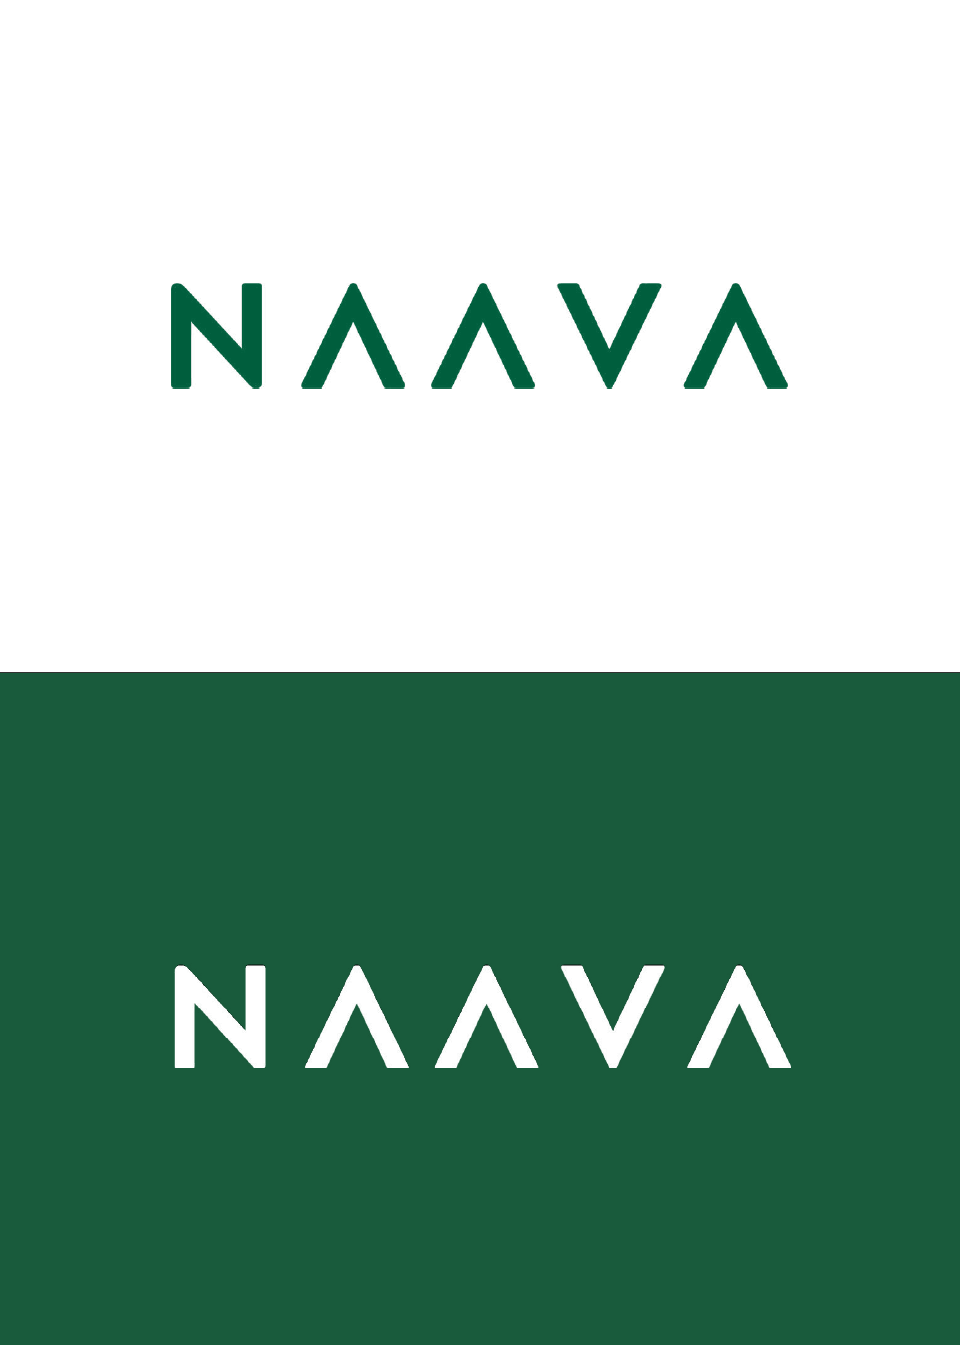 Naava logo 1